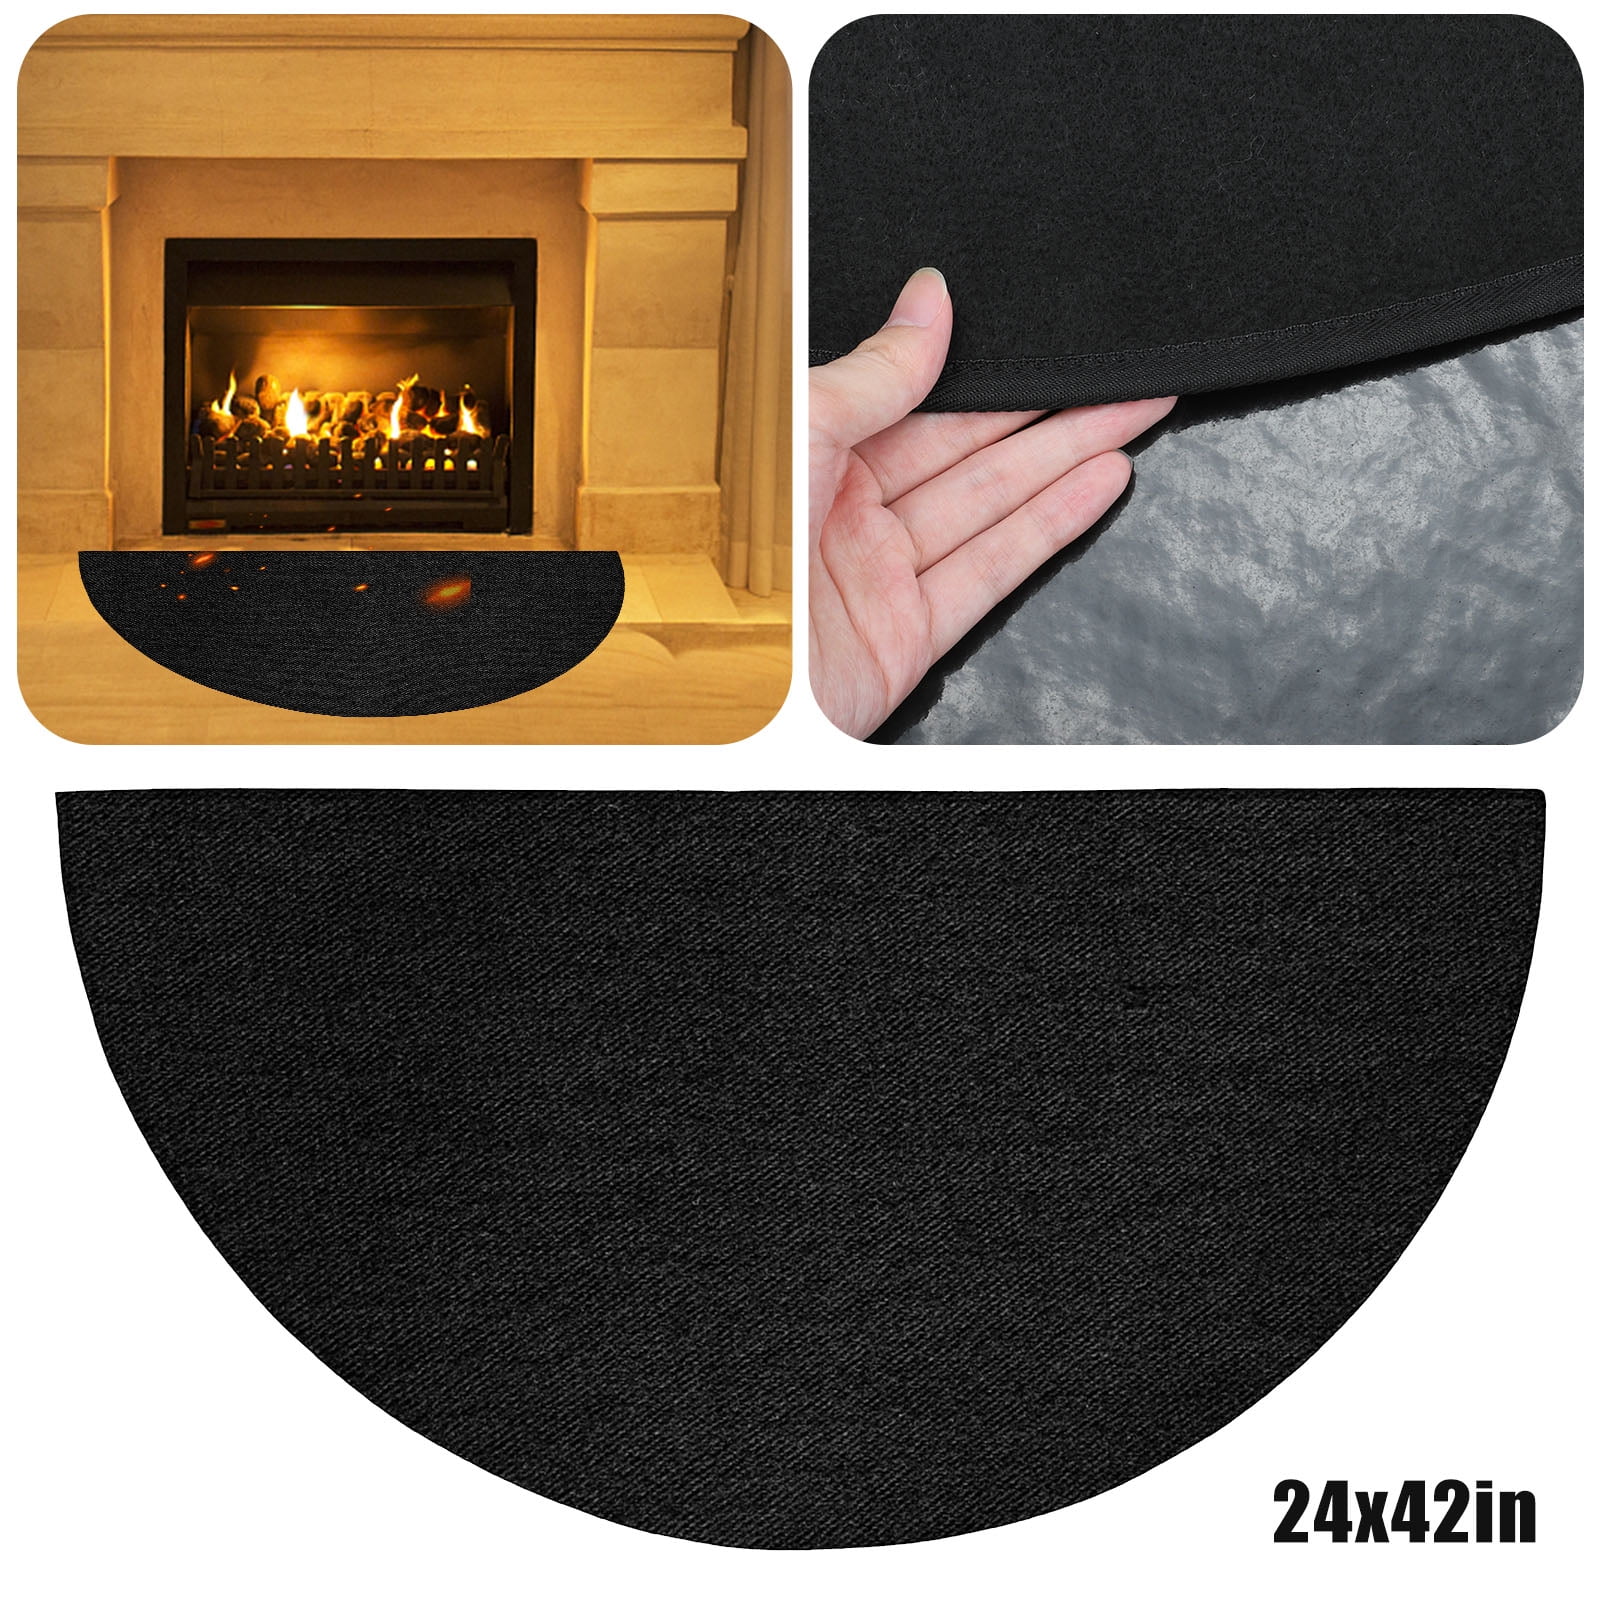 insulation board halloween fireplace｜TikTok Search